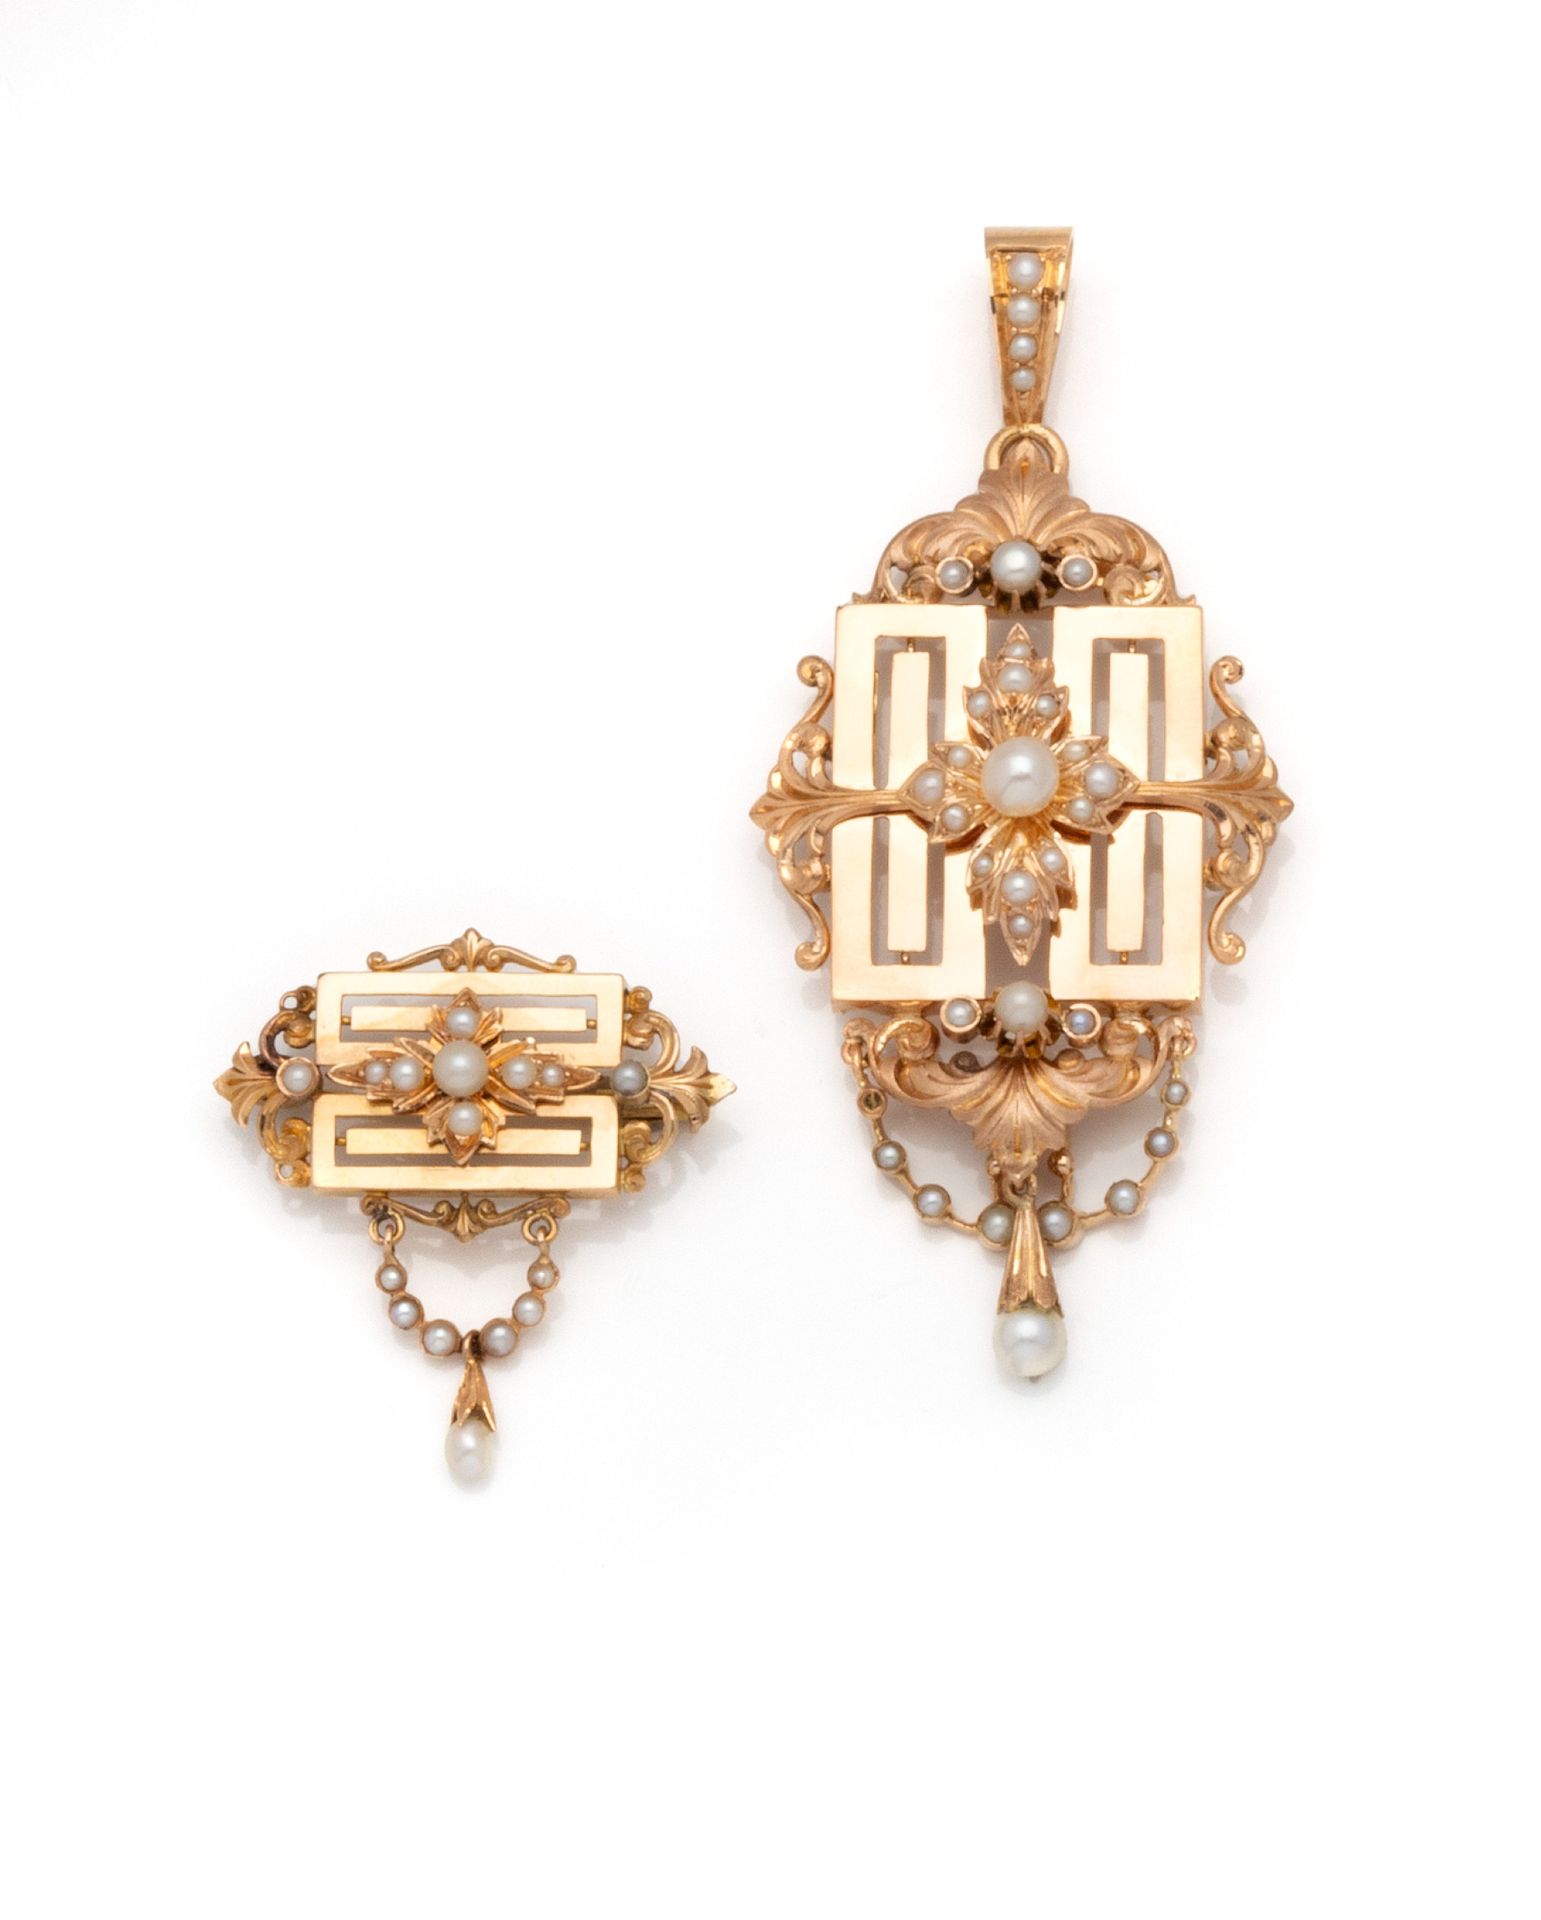 Null 双色18K(750/1000)金套装，包括一个胸针和一个吊坠，装饰有几何图案，刺叶和花环，并有珍珠装饰。

法国的工作。

胸针尺寸：30 x 35 &hellip;